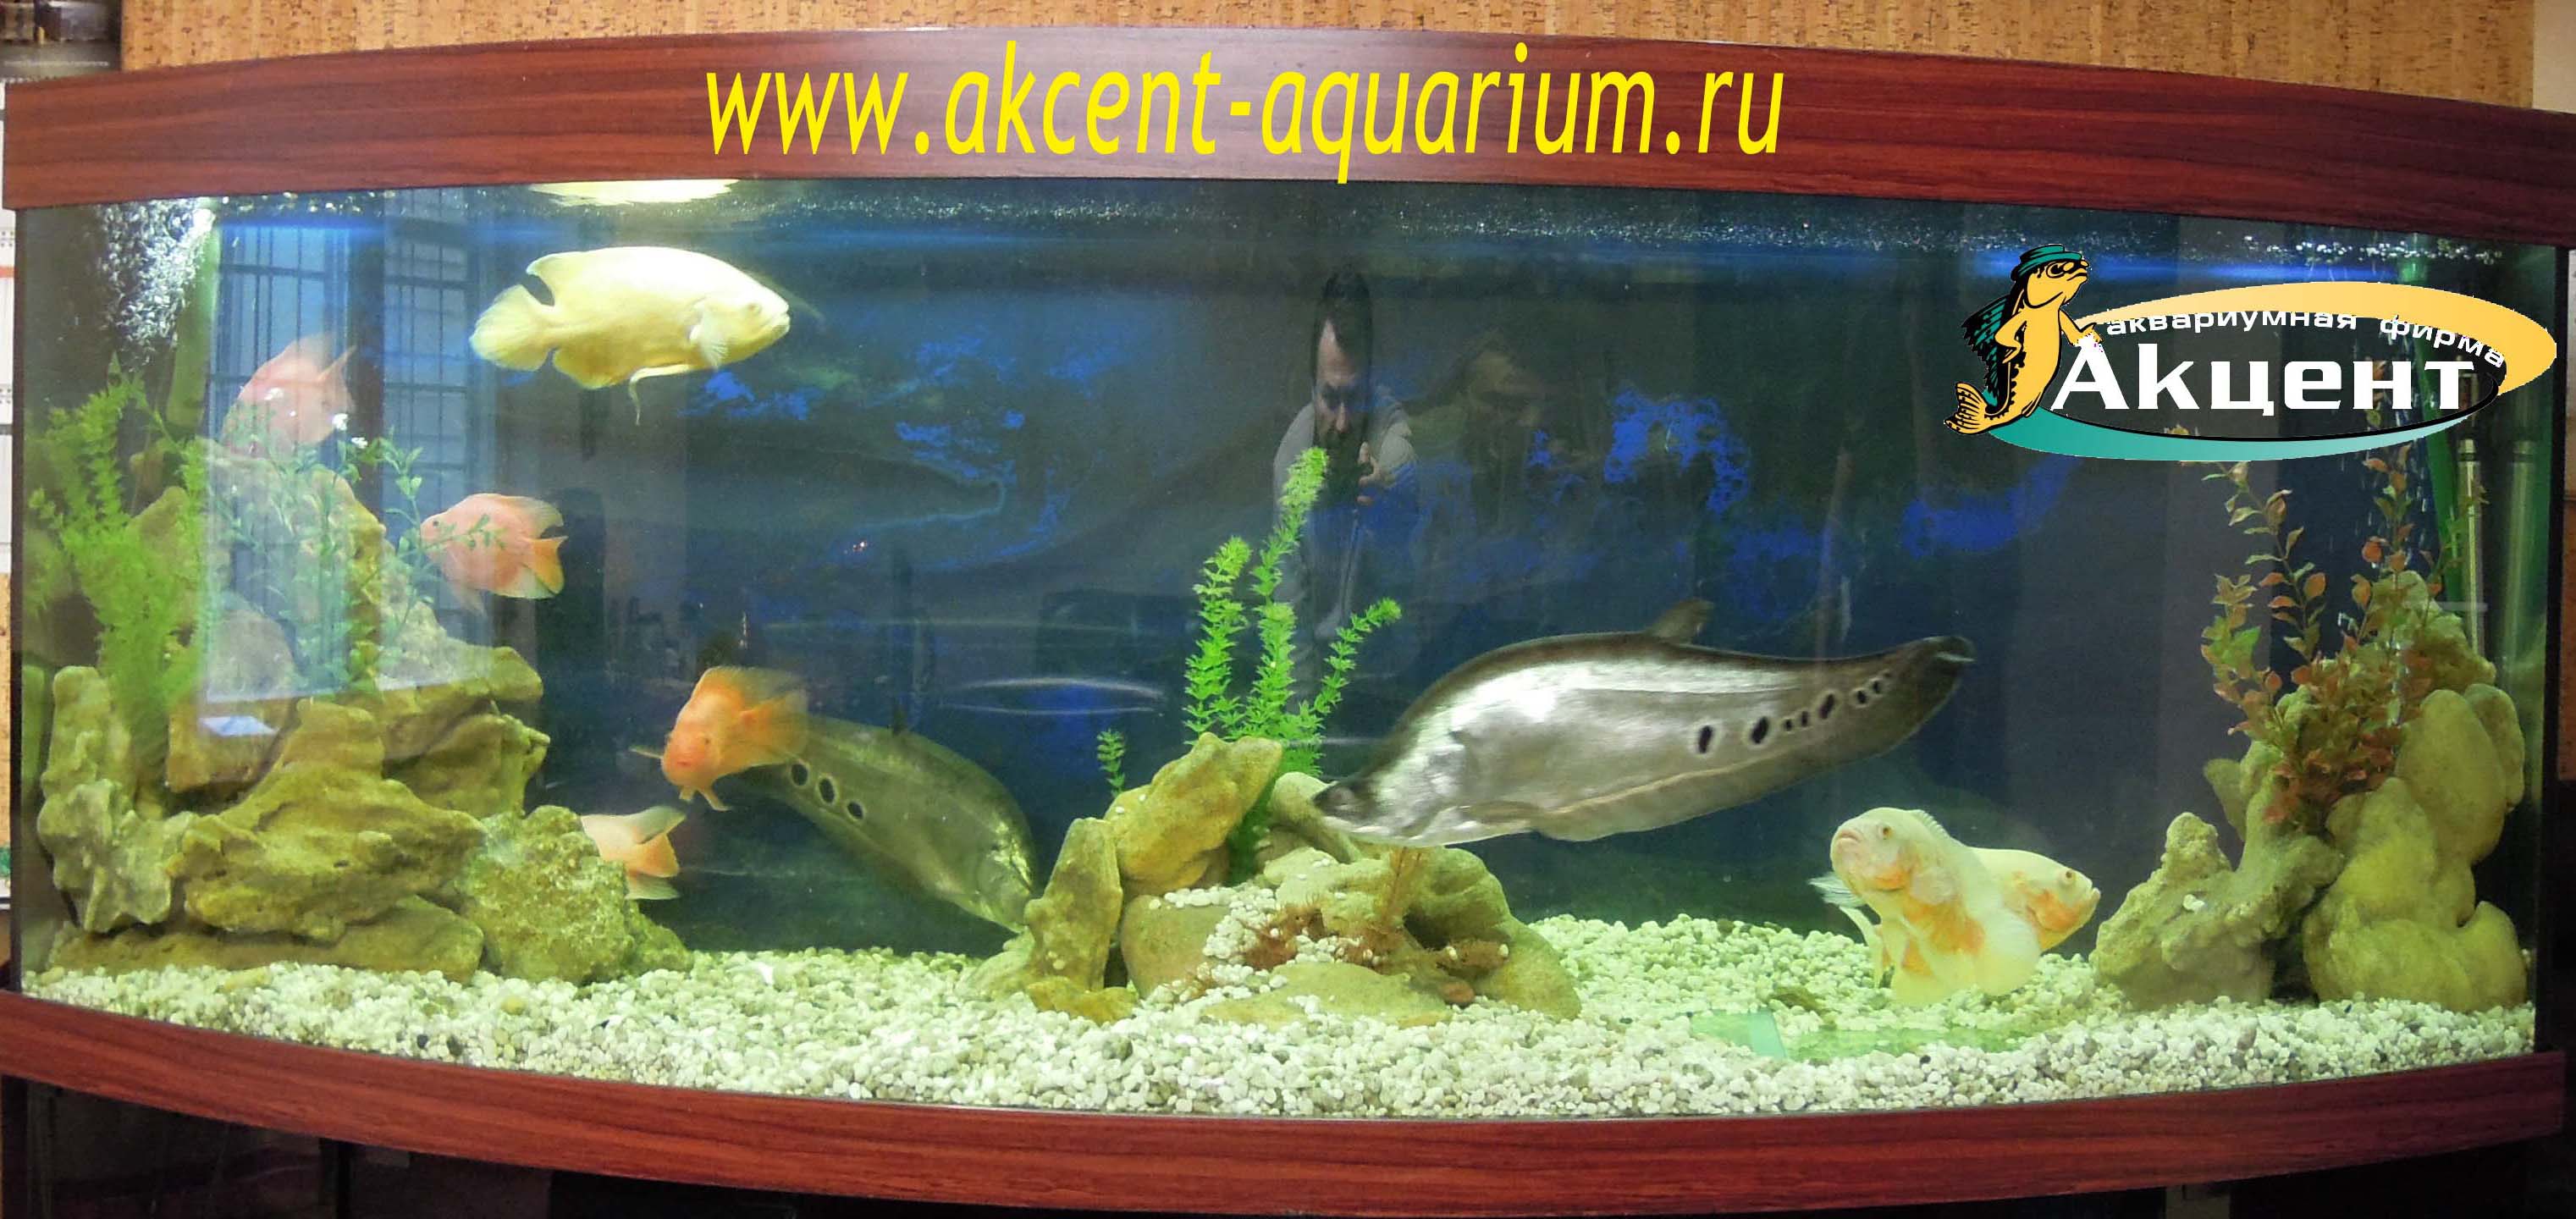 Акцент-аквариум, аквариум 1000 литров, индийские ножи, астронотусы, попугаи.